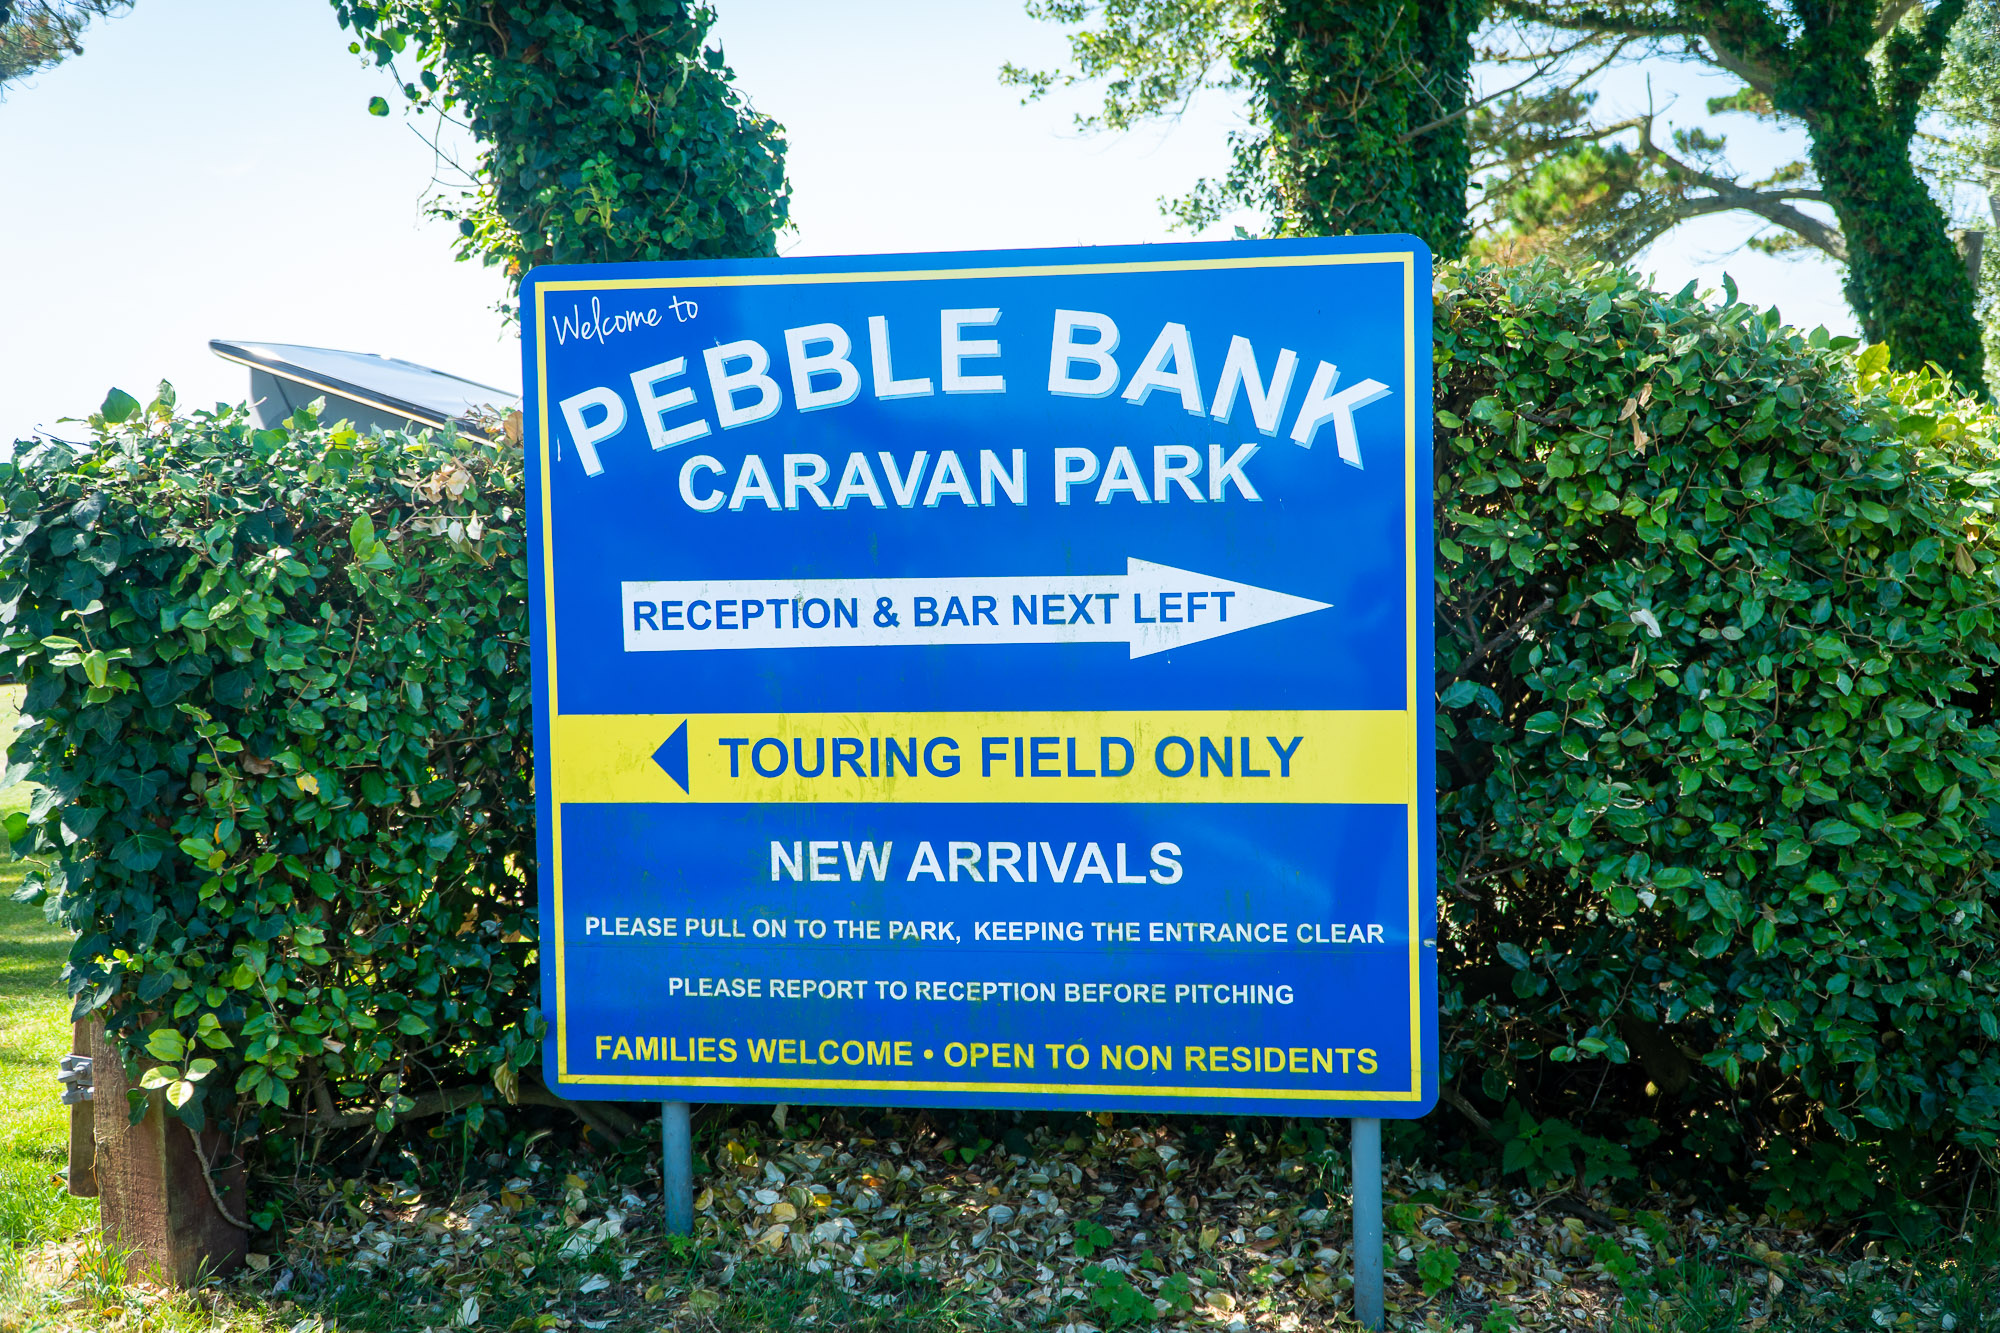 Pebble Bank Caravan Park